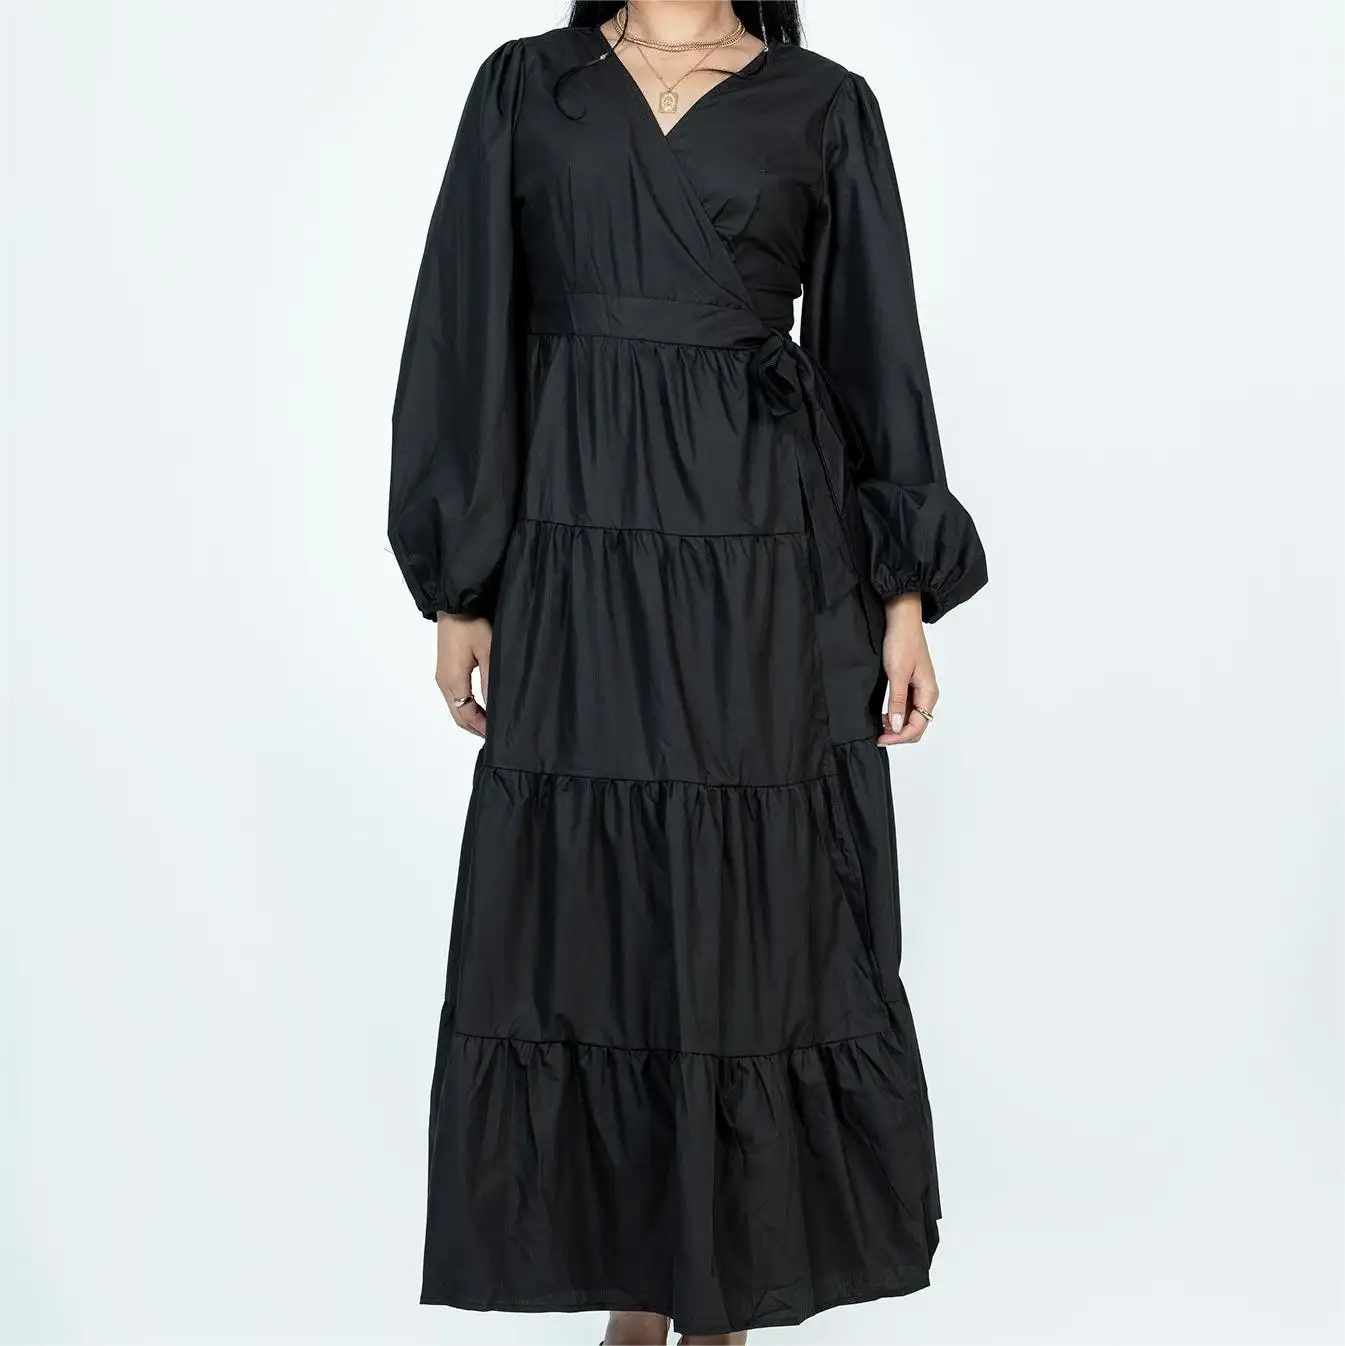 OEM High Quality Women's Long Sleeve Black Maxi Casual Dresses